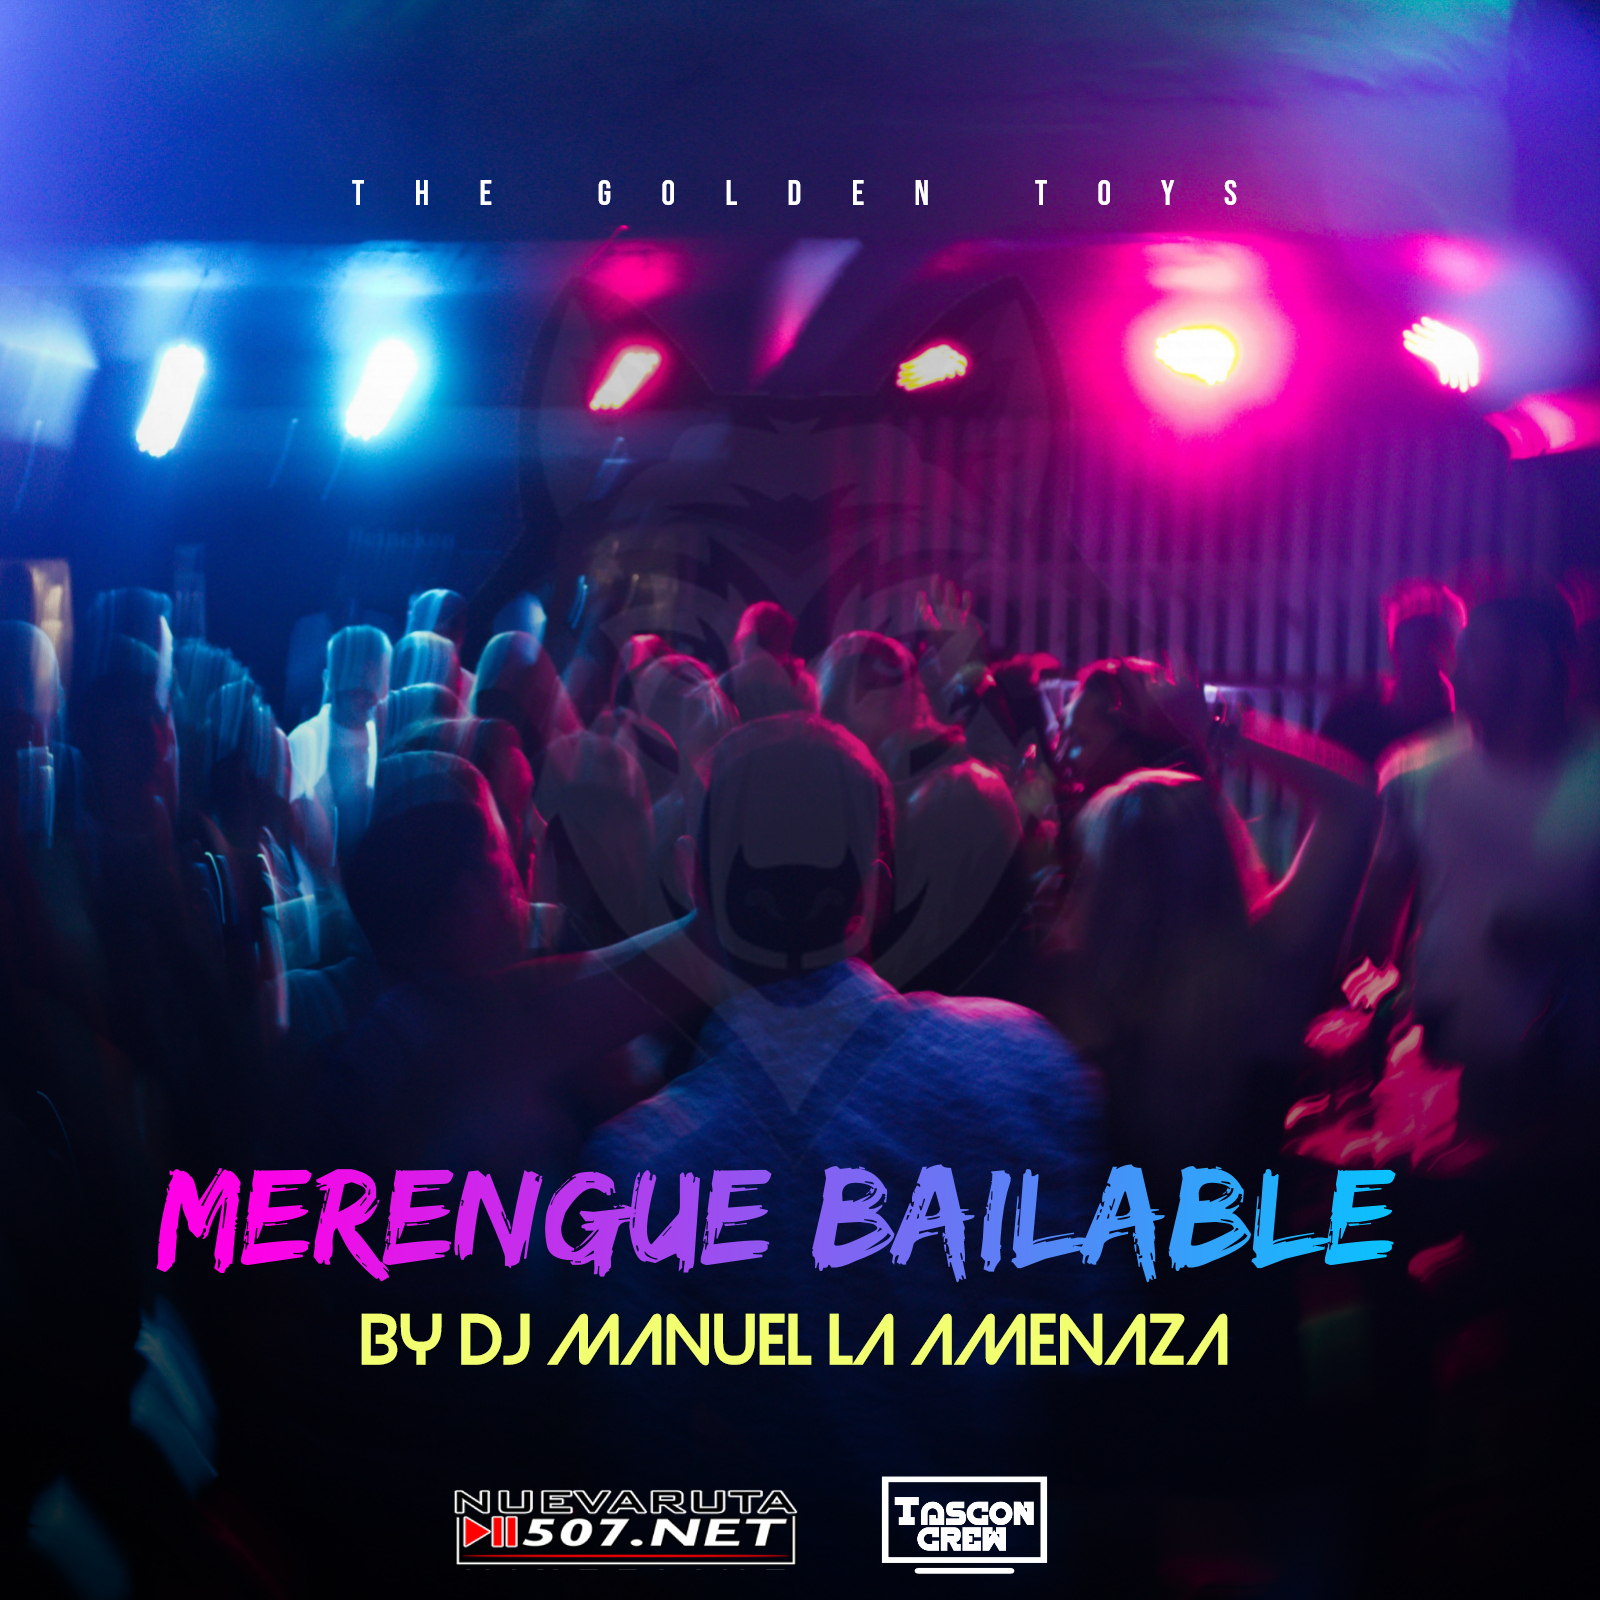 Merengue Bailable By Dj Manuel La Amenaza.mp3